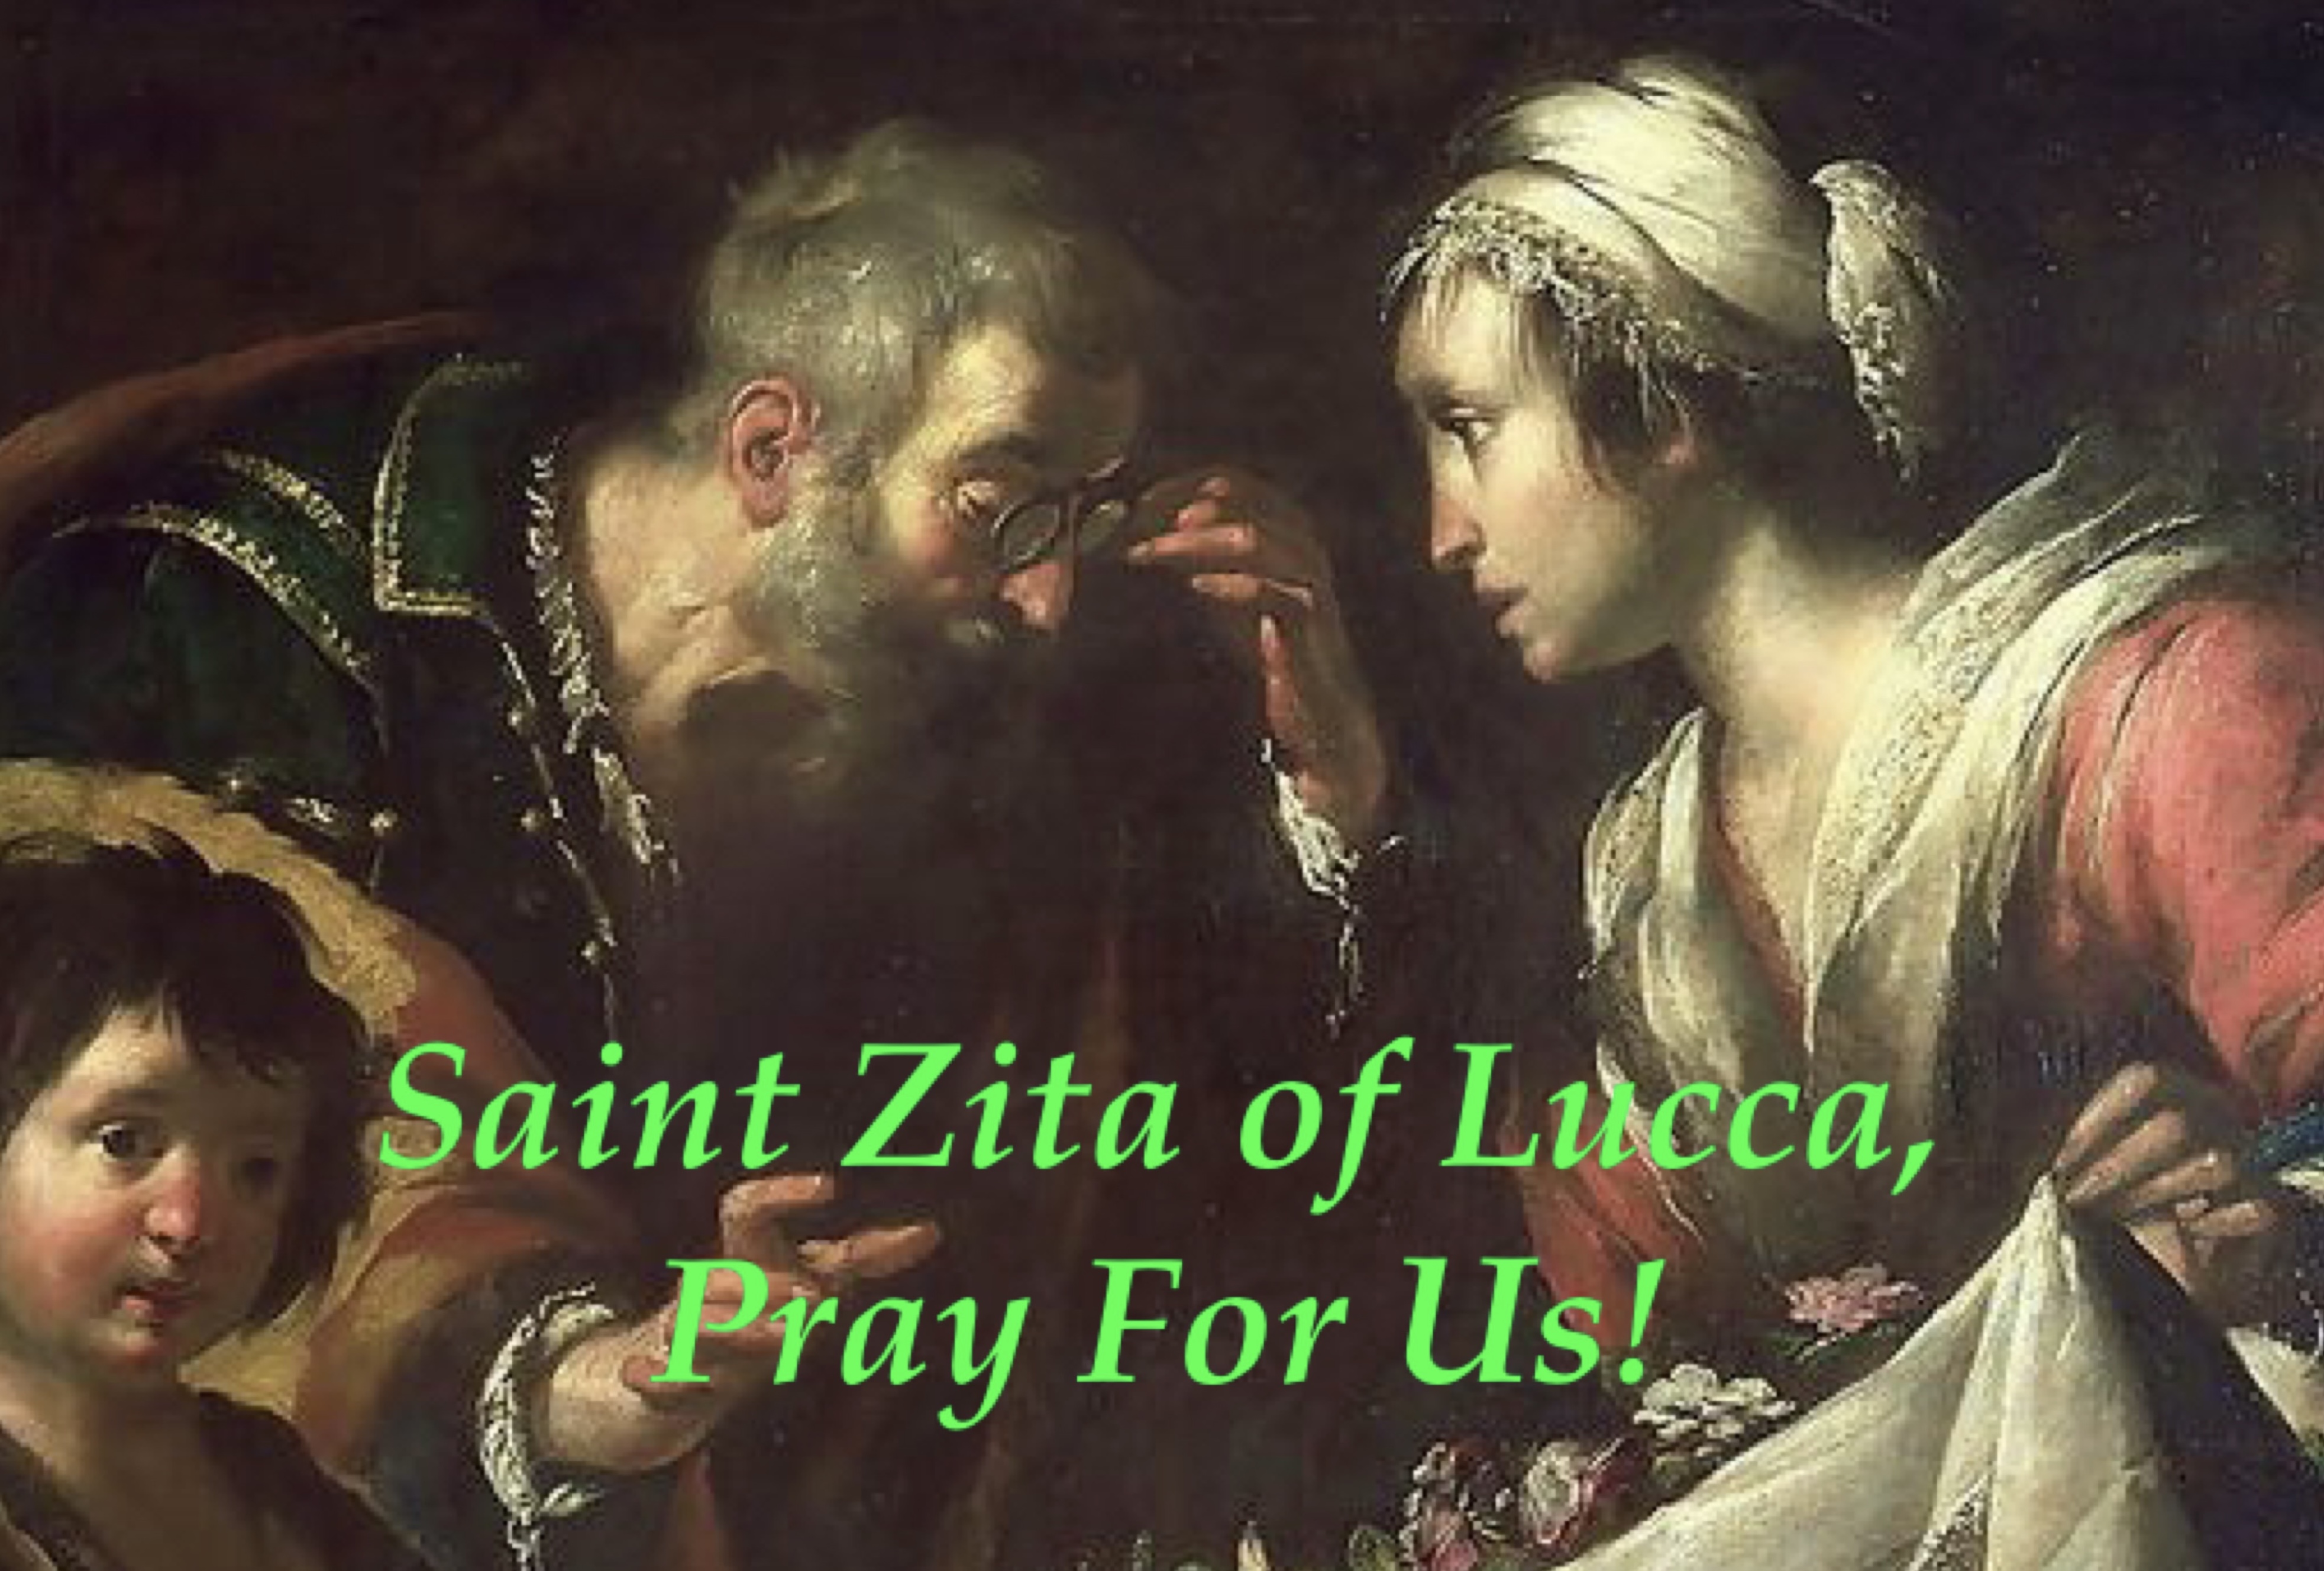 27th April - Saint Zita of Lucca